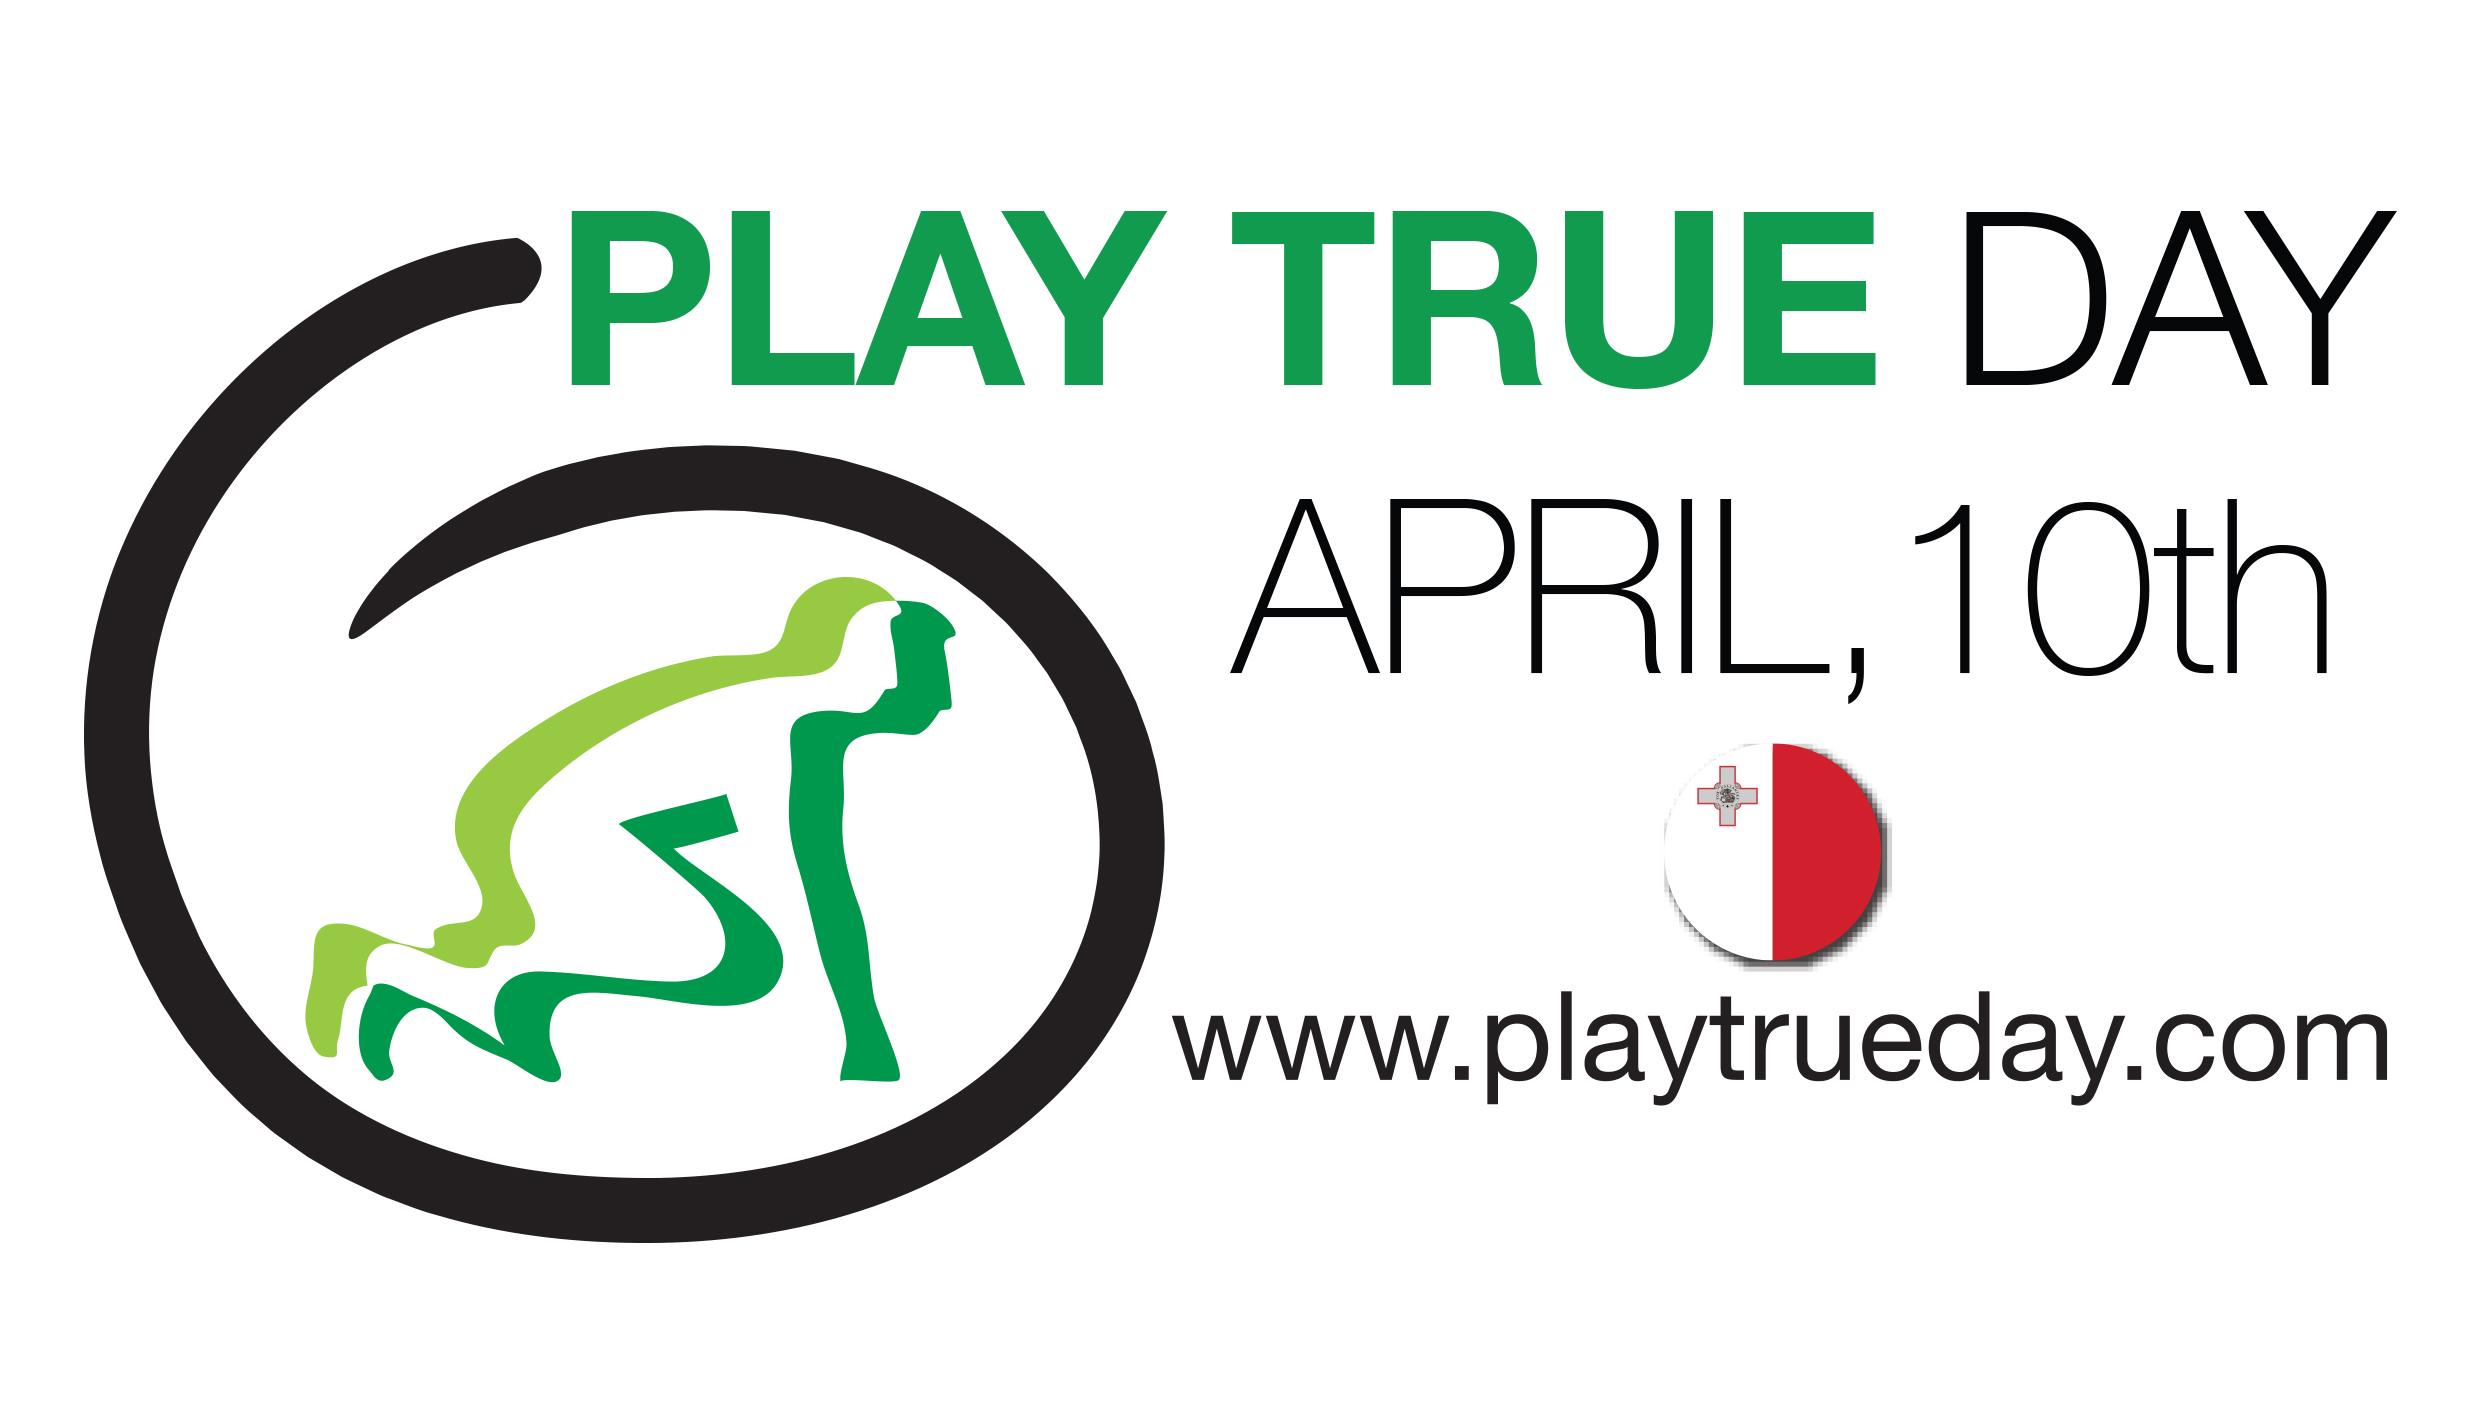 Play true. Wada Play true. Play true антидопинг логотип. Play true Day logo.